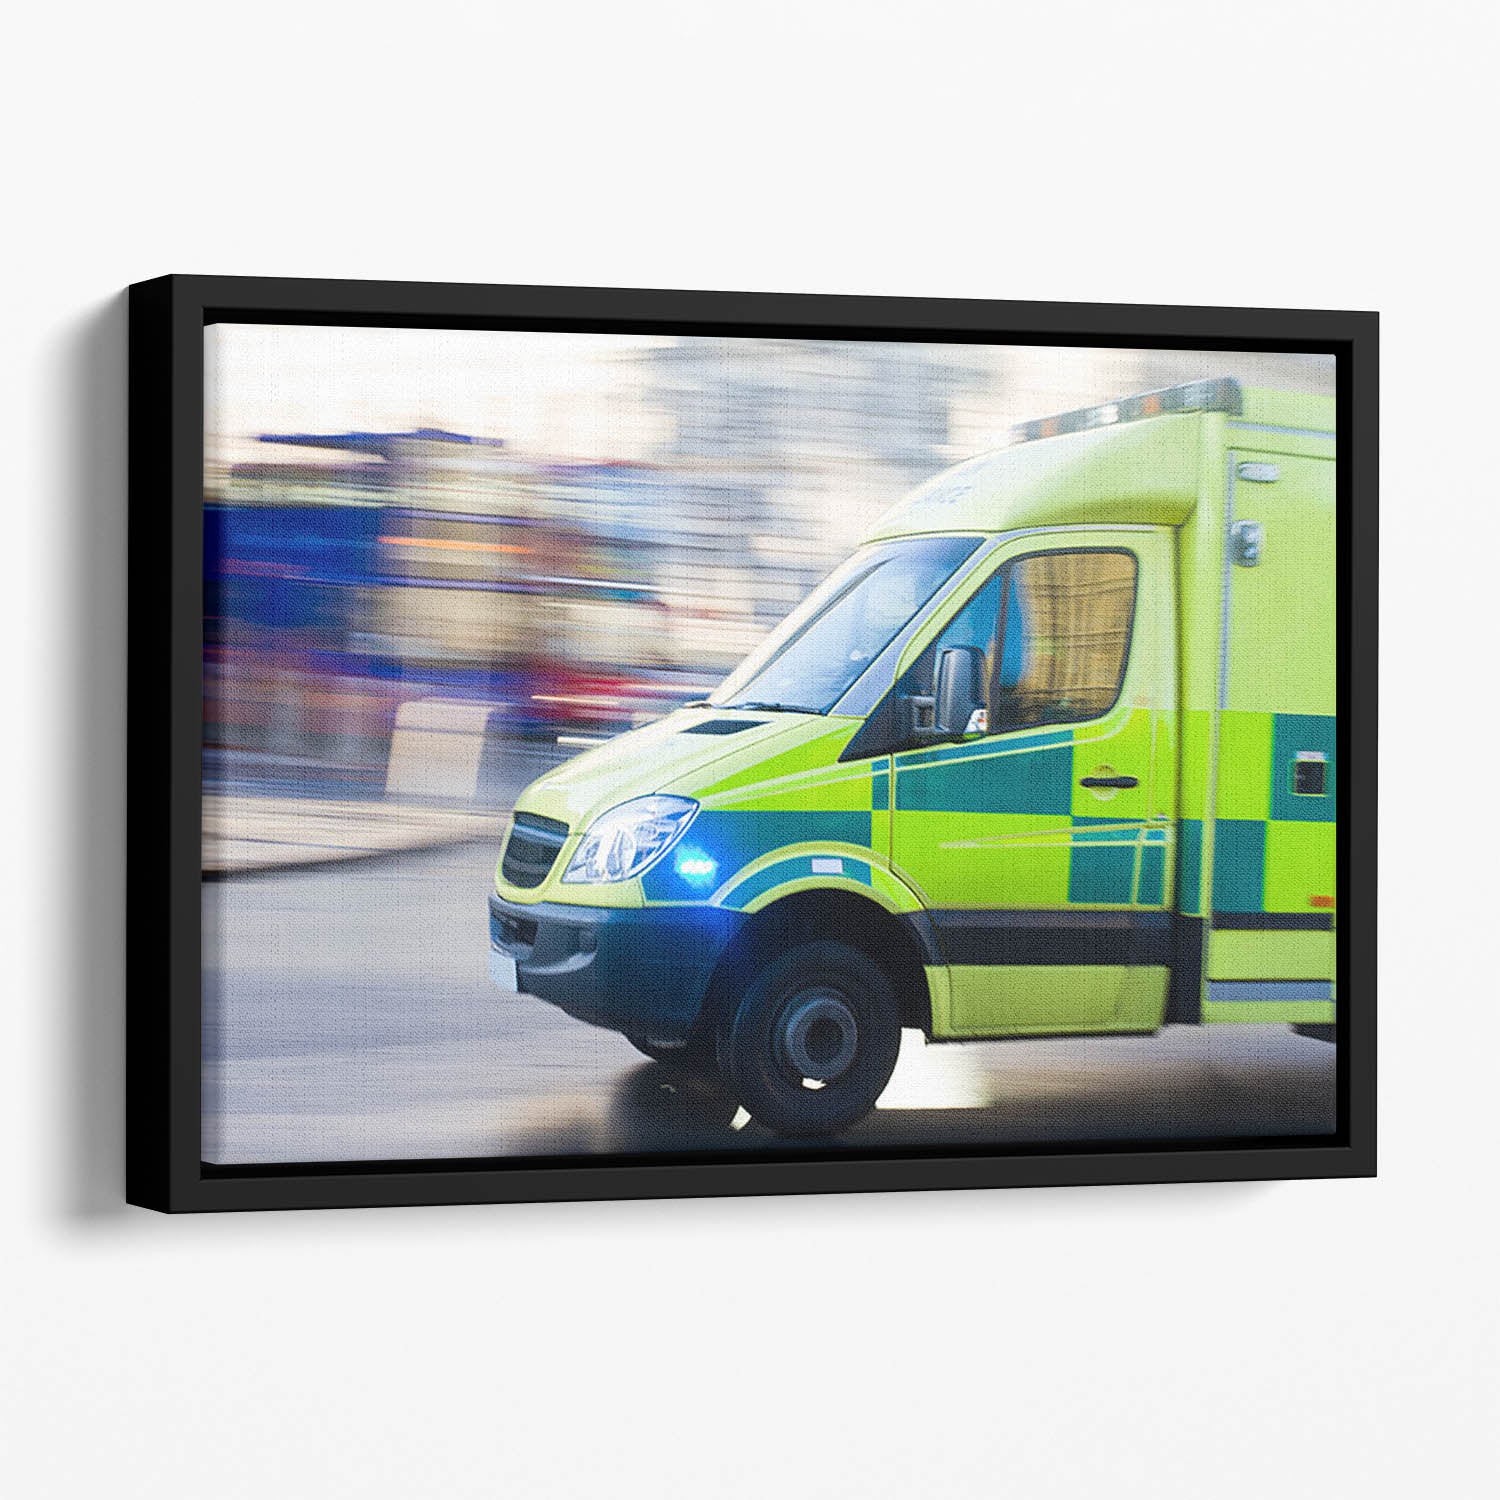 British ambulance in motion blur Floating Framed Canvas